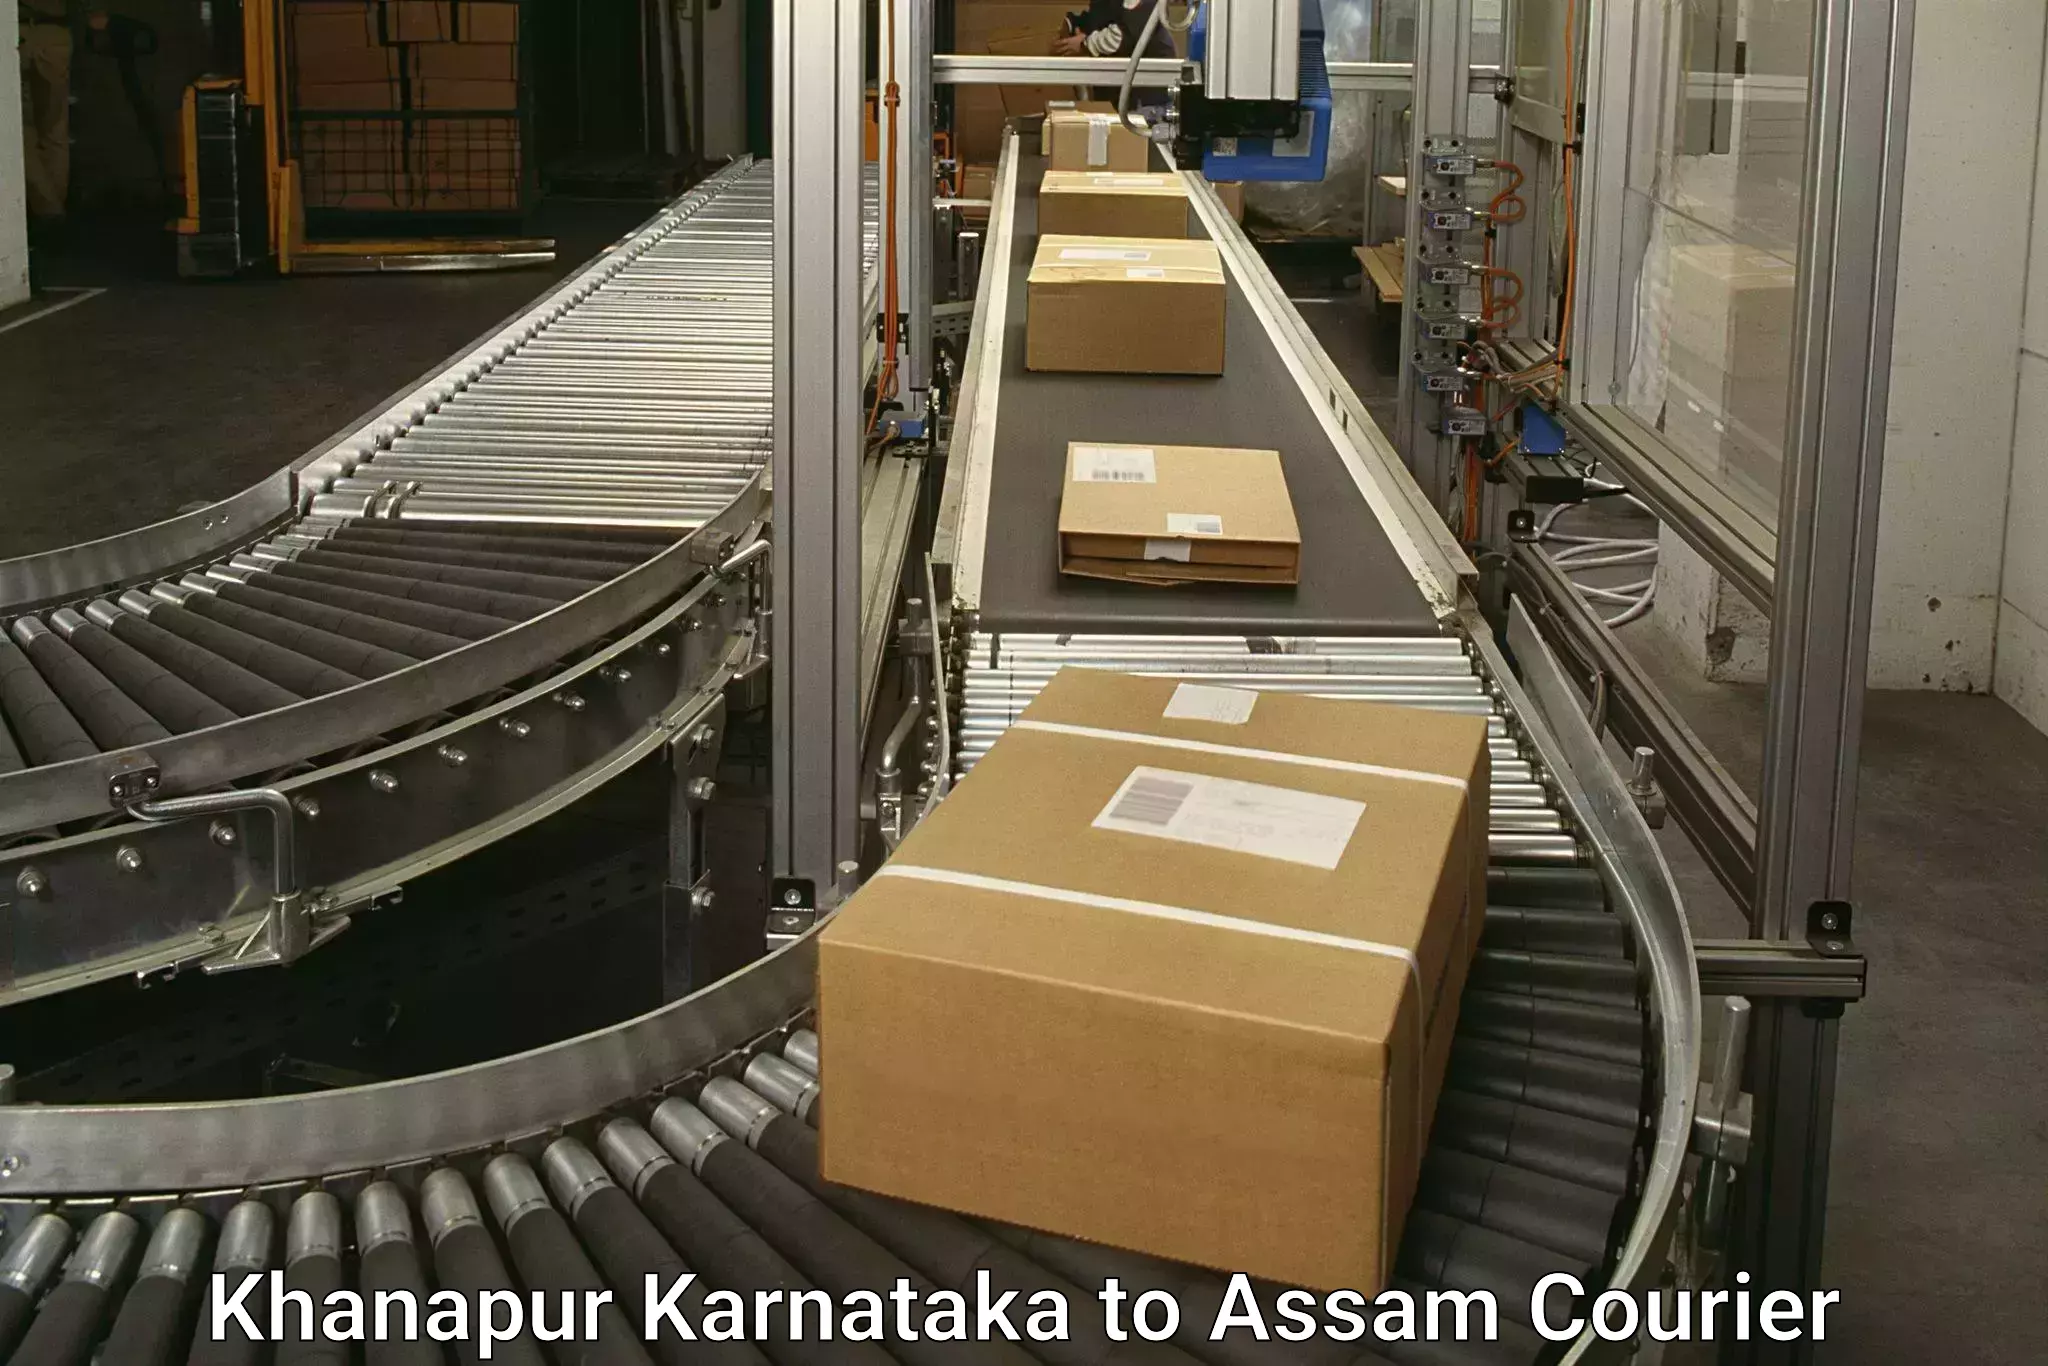 Courier service comparison Khanapur Karnataka to Guwahati University